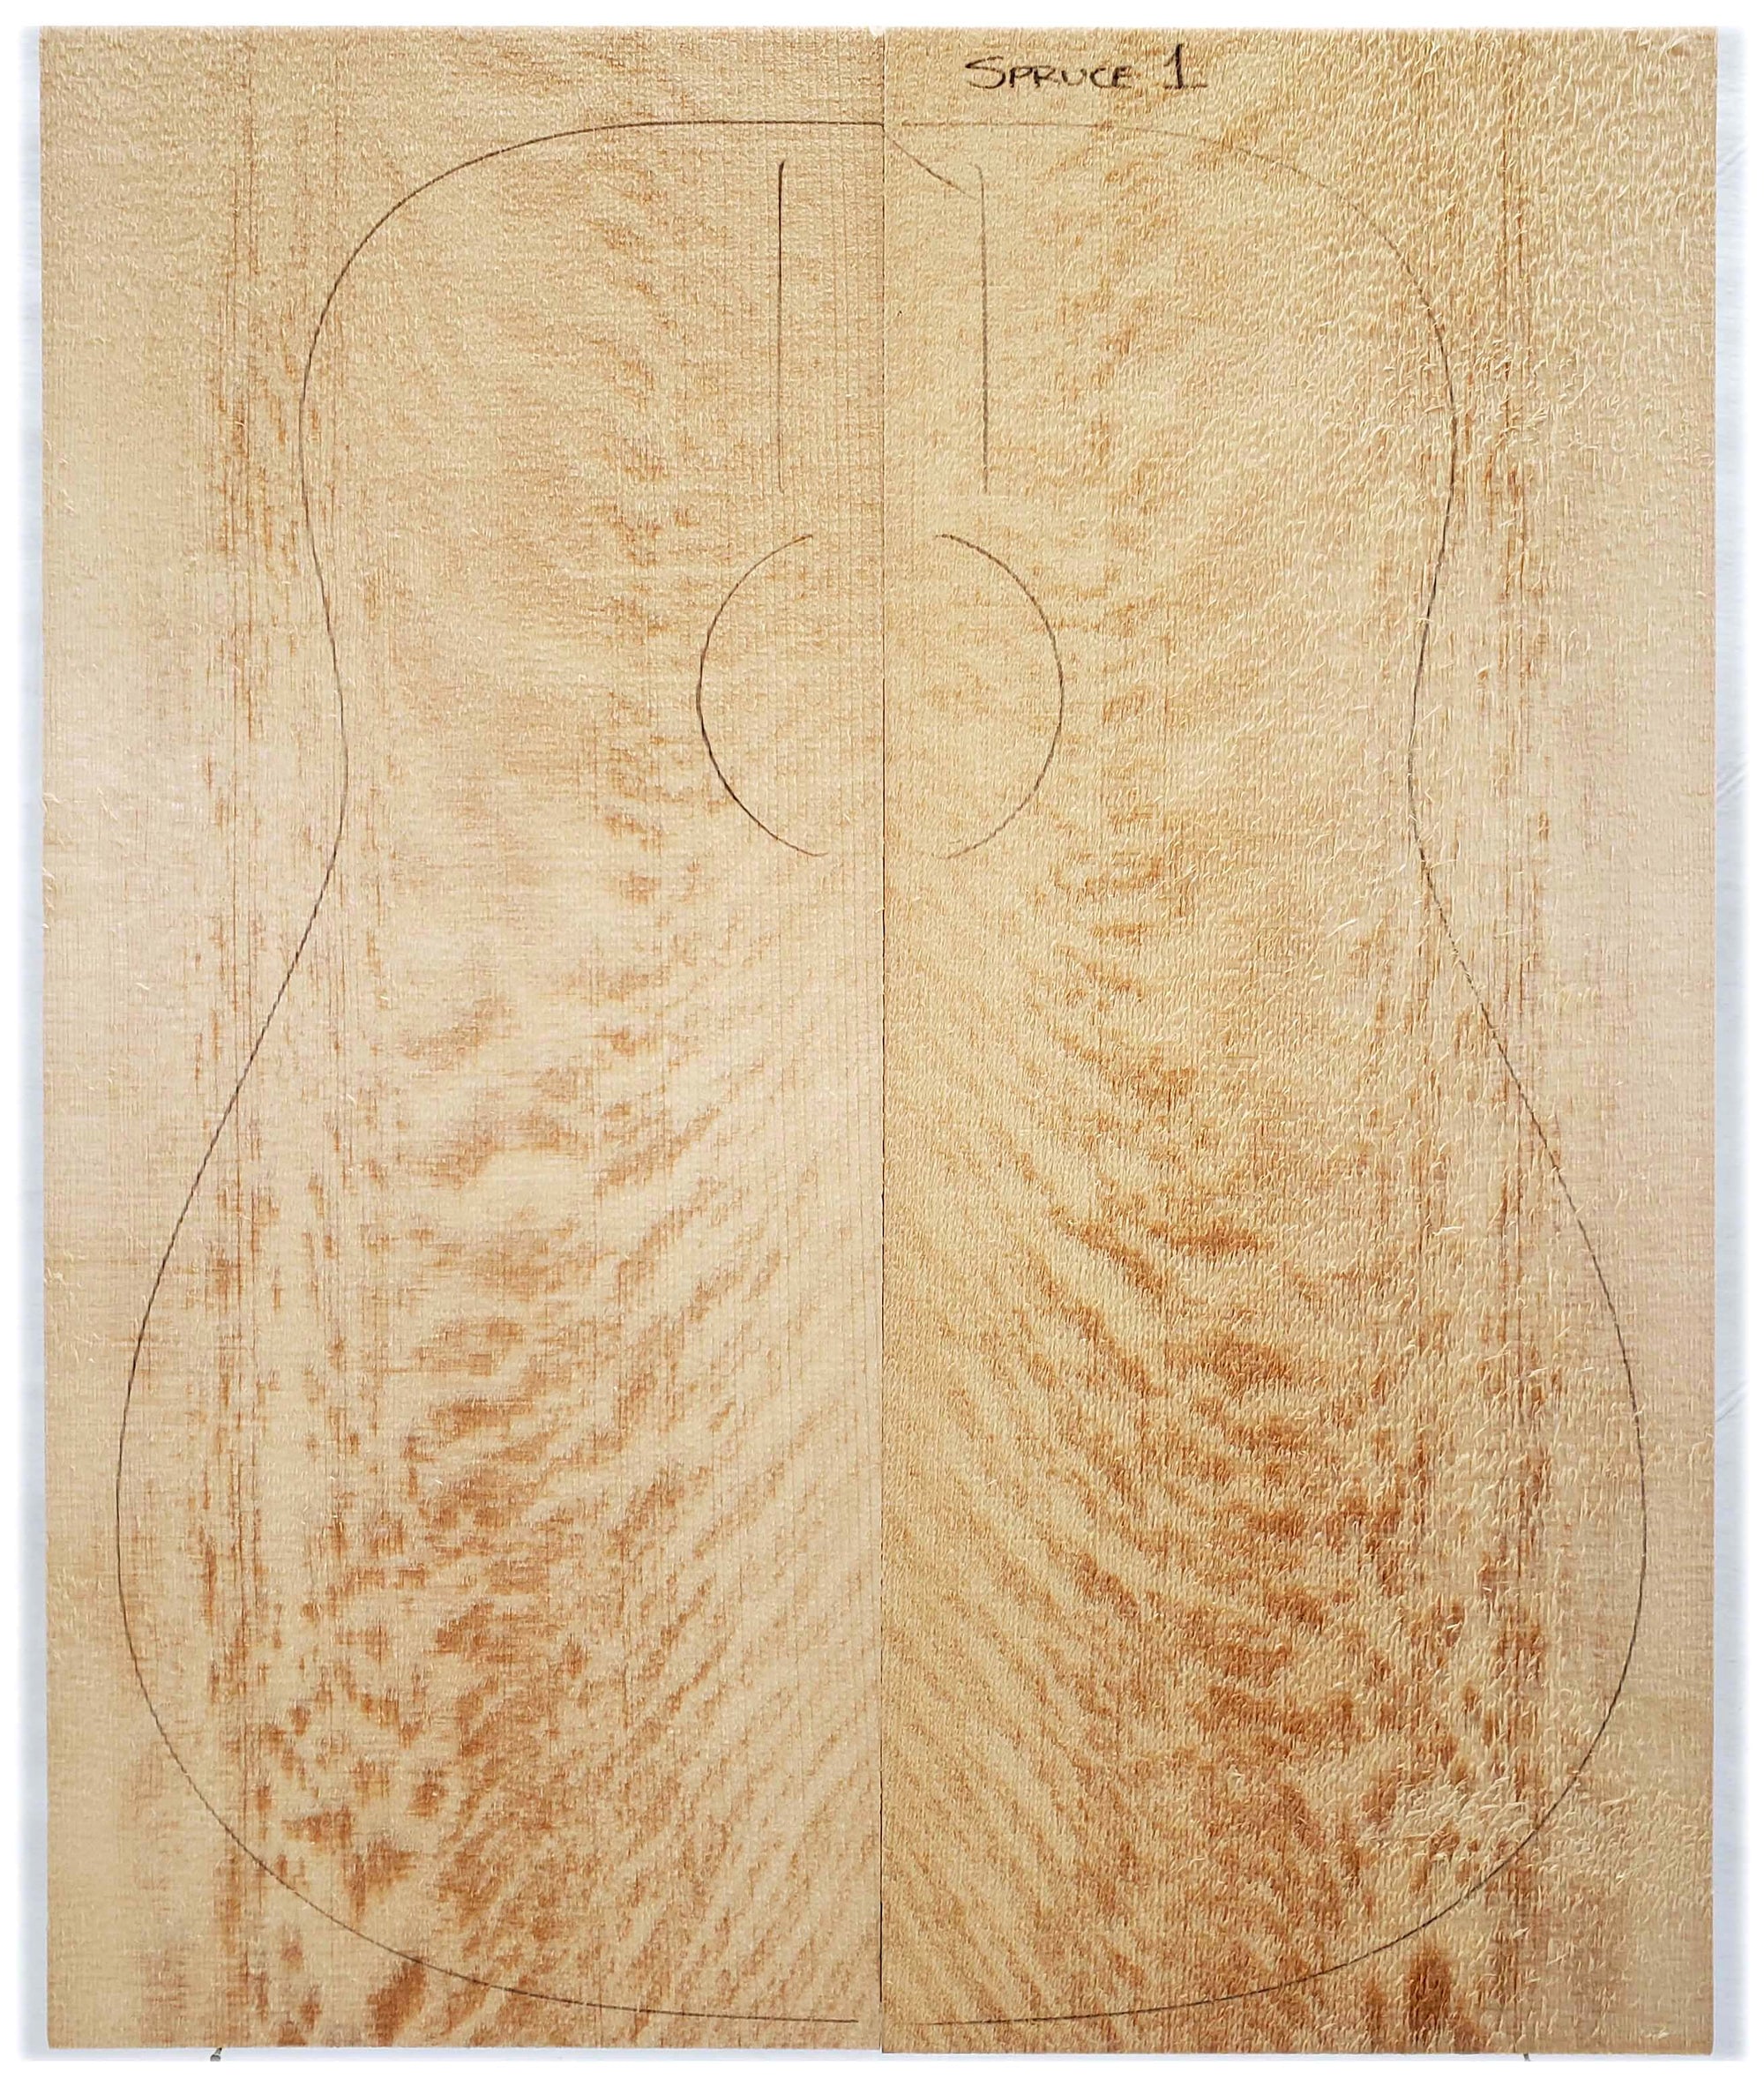 engelmann spruce wood